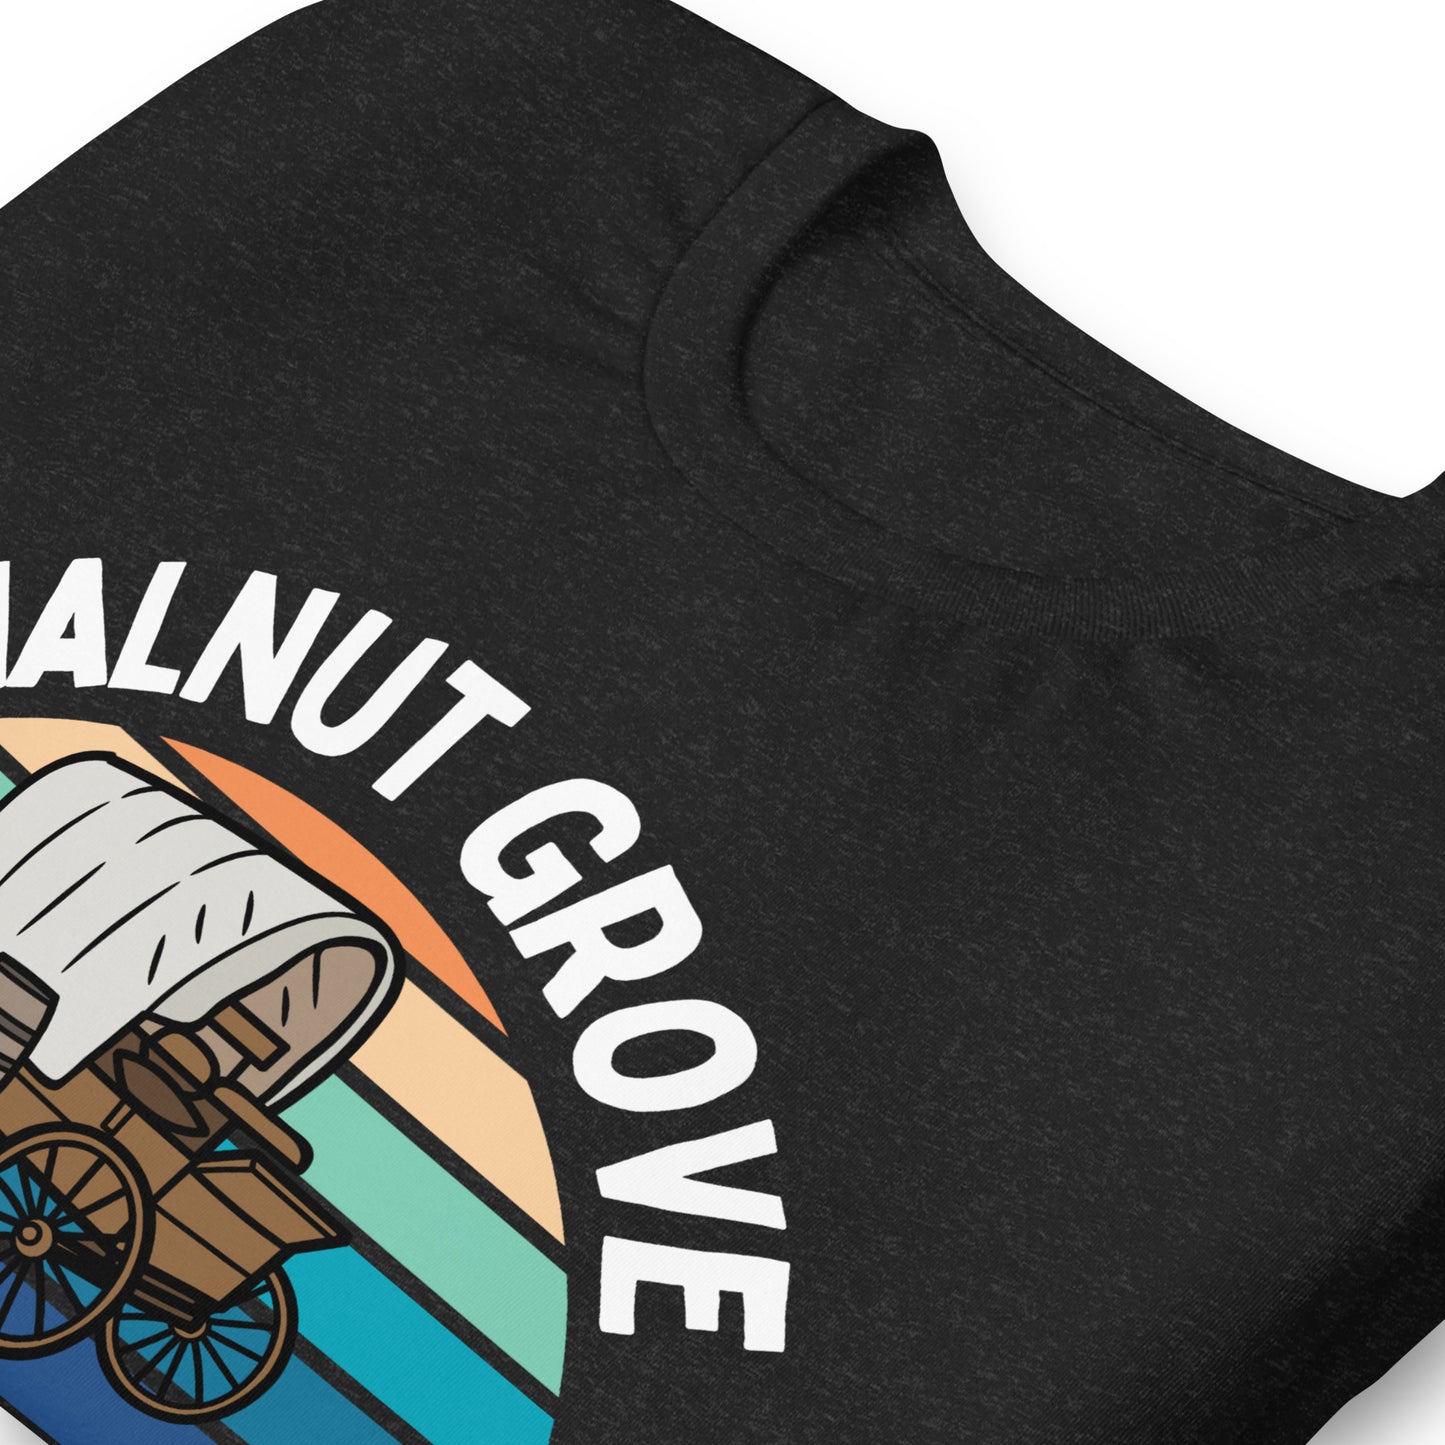 Laura Ingalls Wilder T-shirt, Little House on the Prairie Fans, Walnut Grove Gift